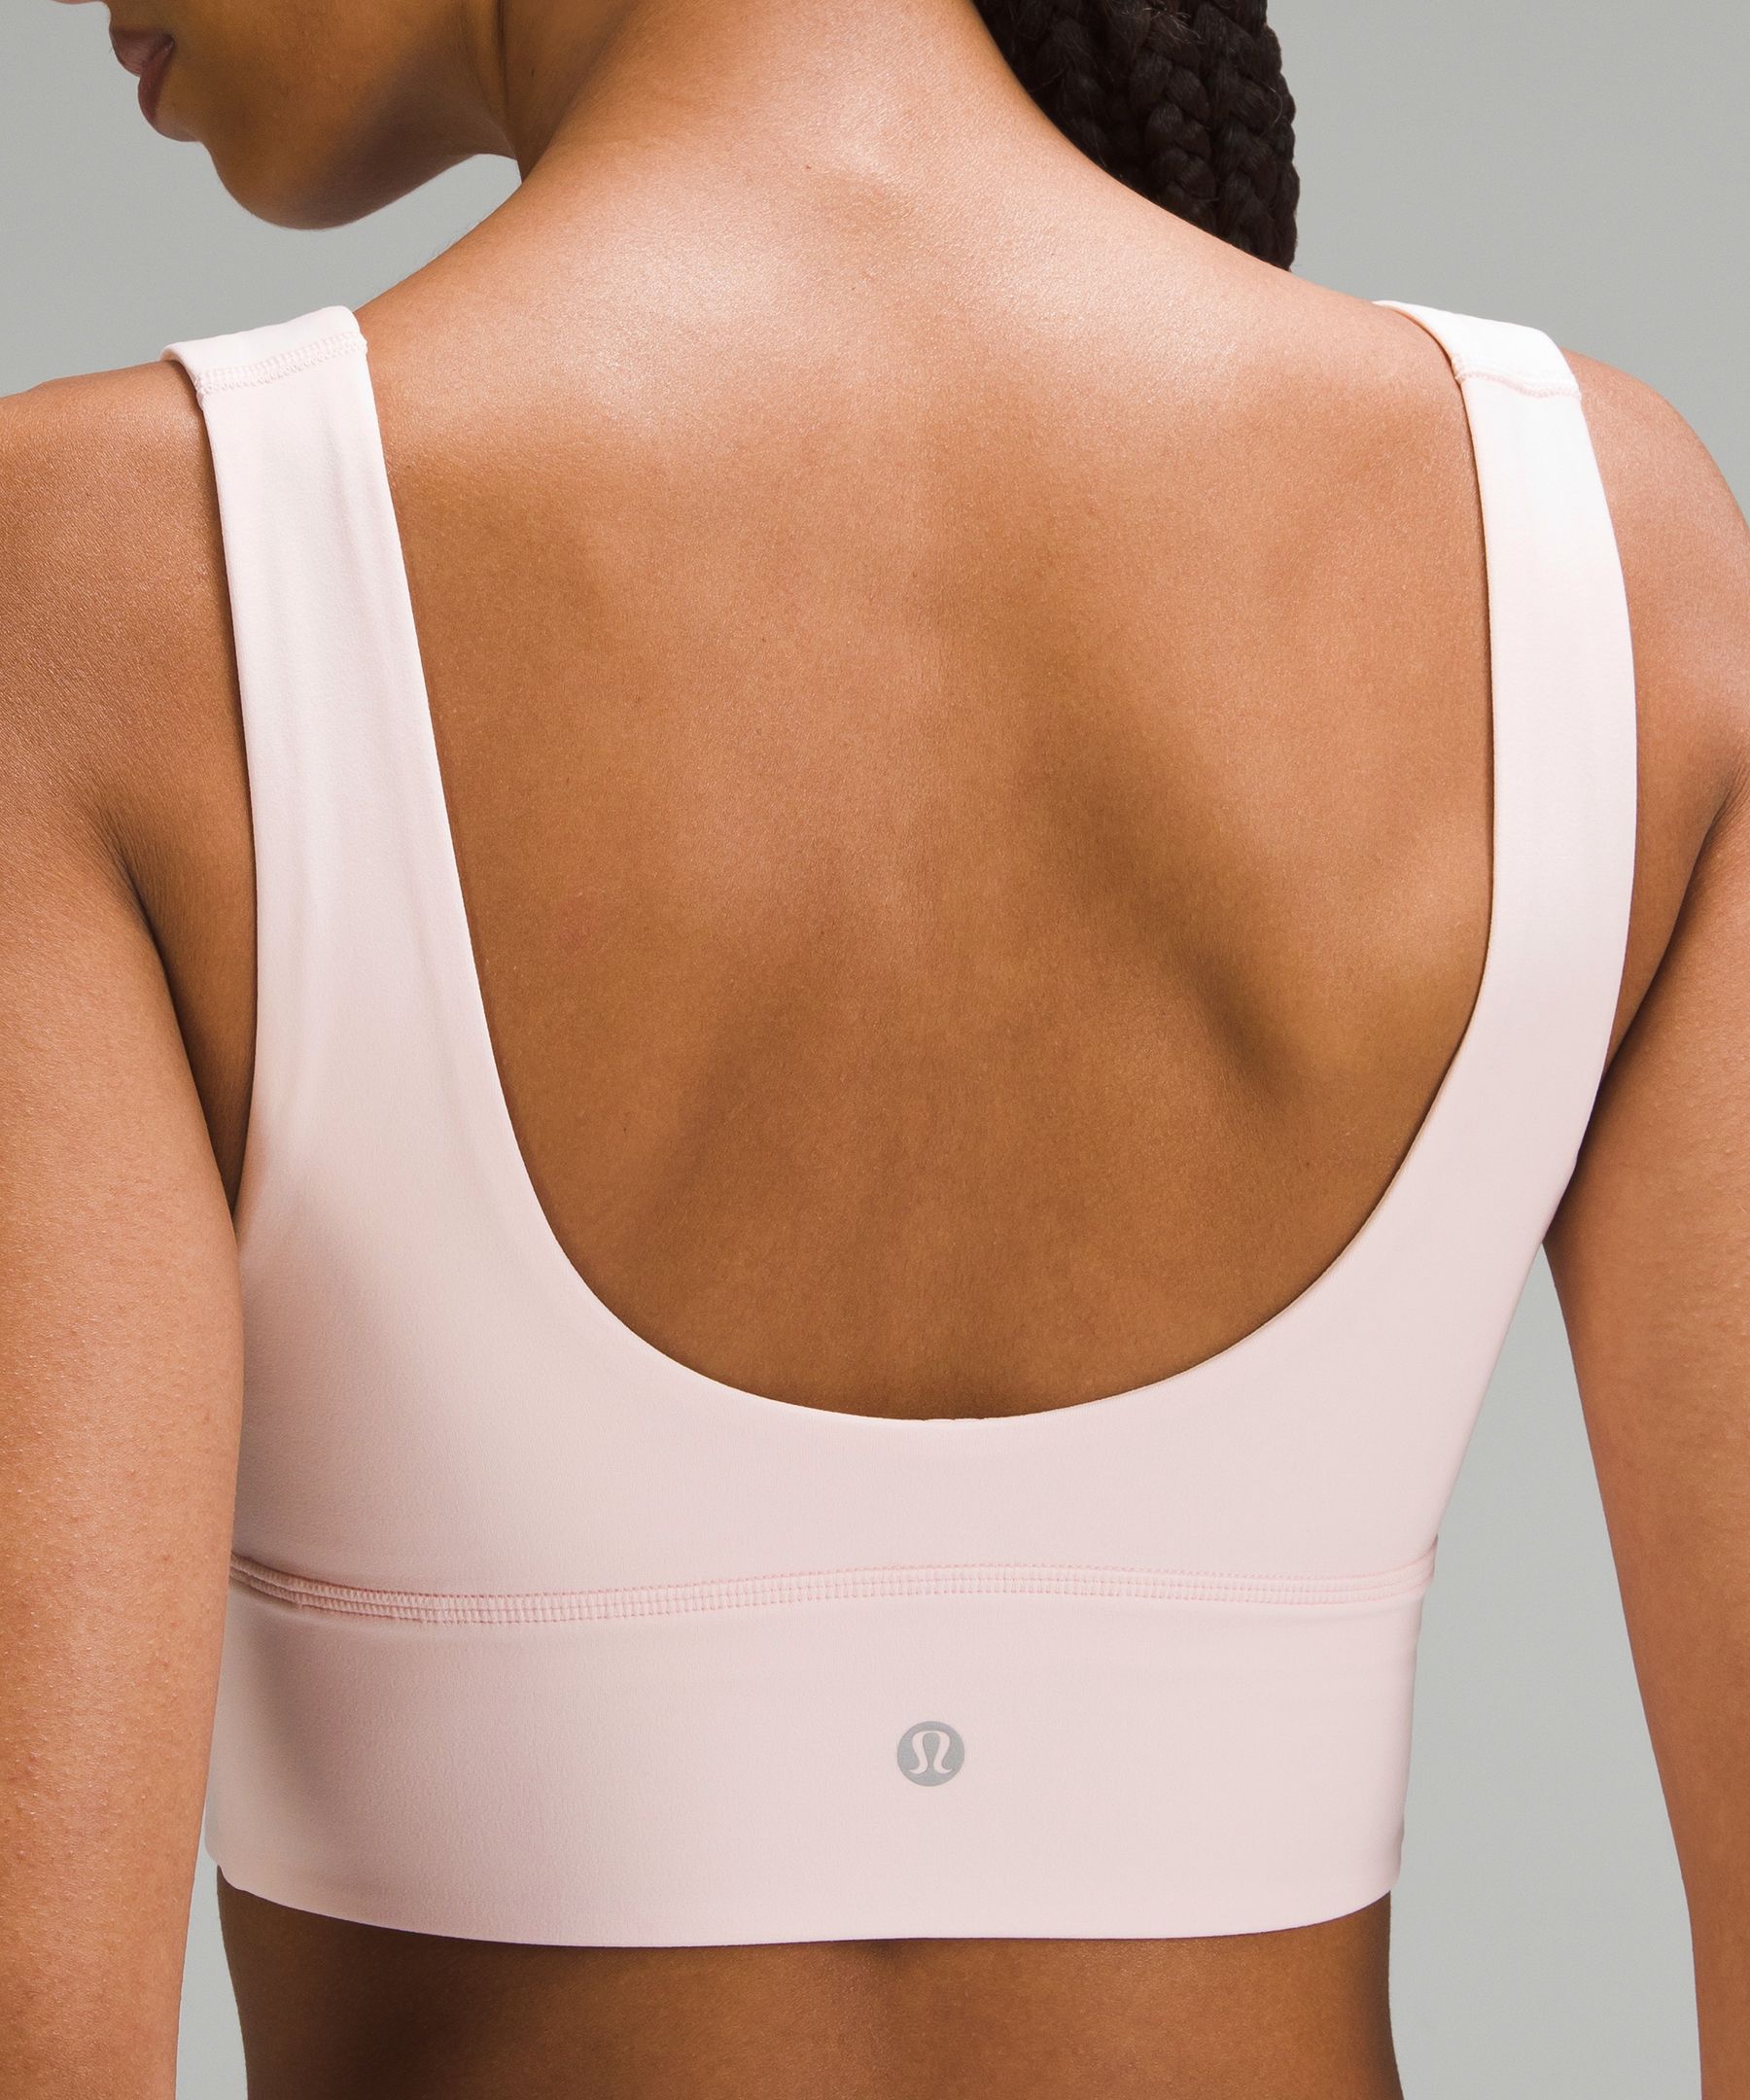 Lululemon align v-neck sports bra full review after wearing it for a f, Lululemon